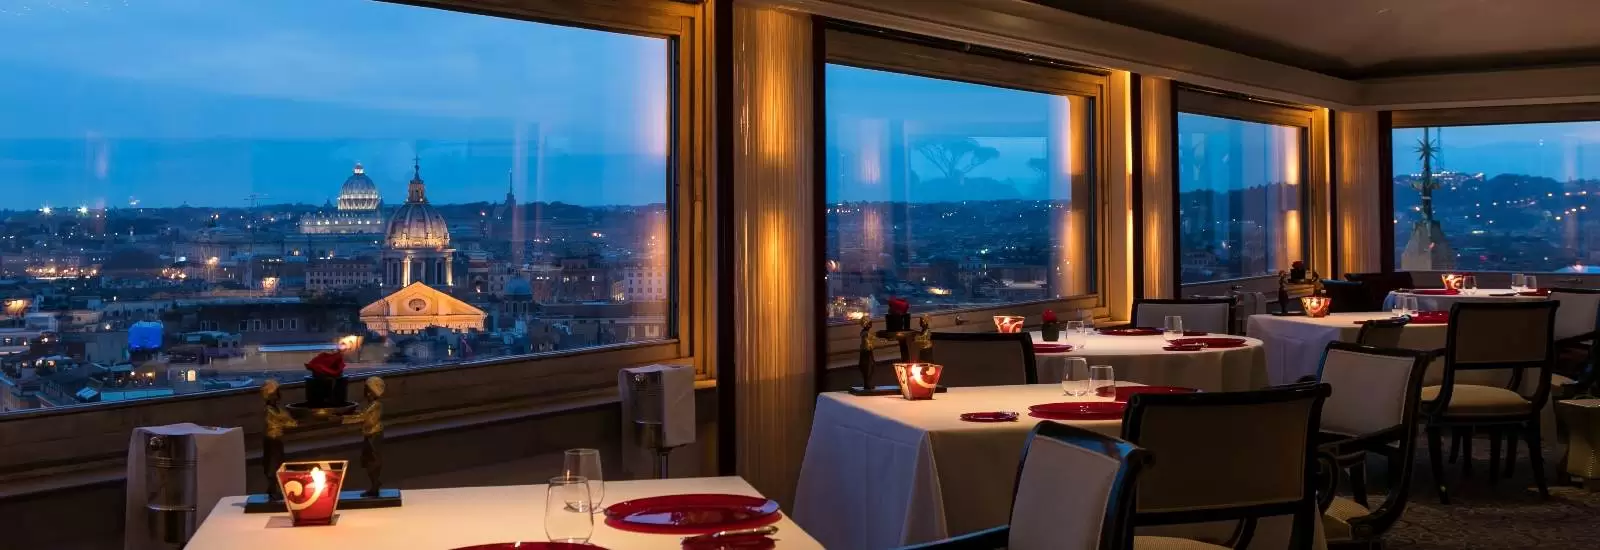 best views of Rome - Hotel Hassler Imago Restaurant